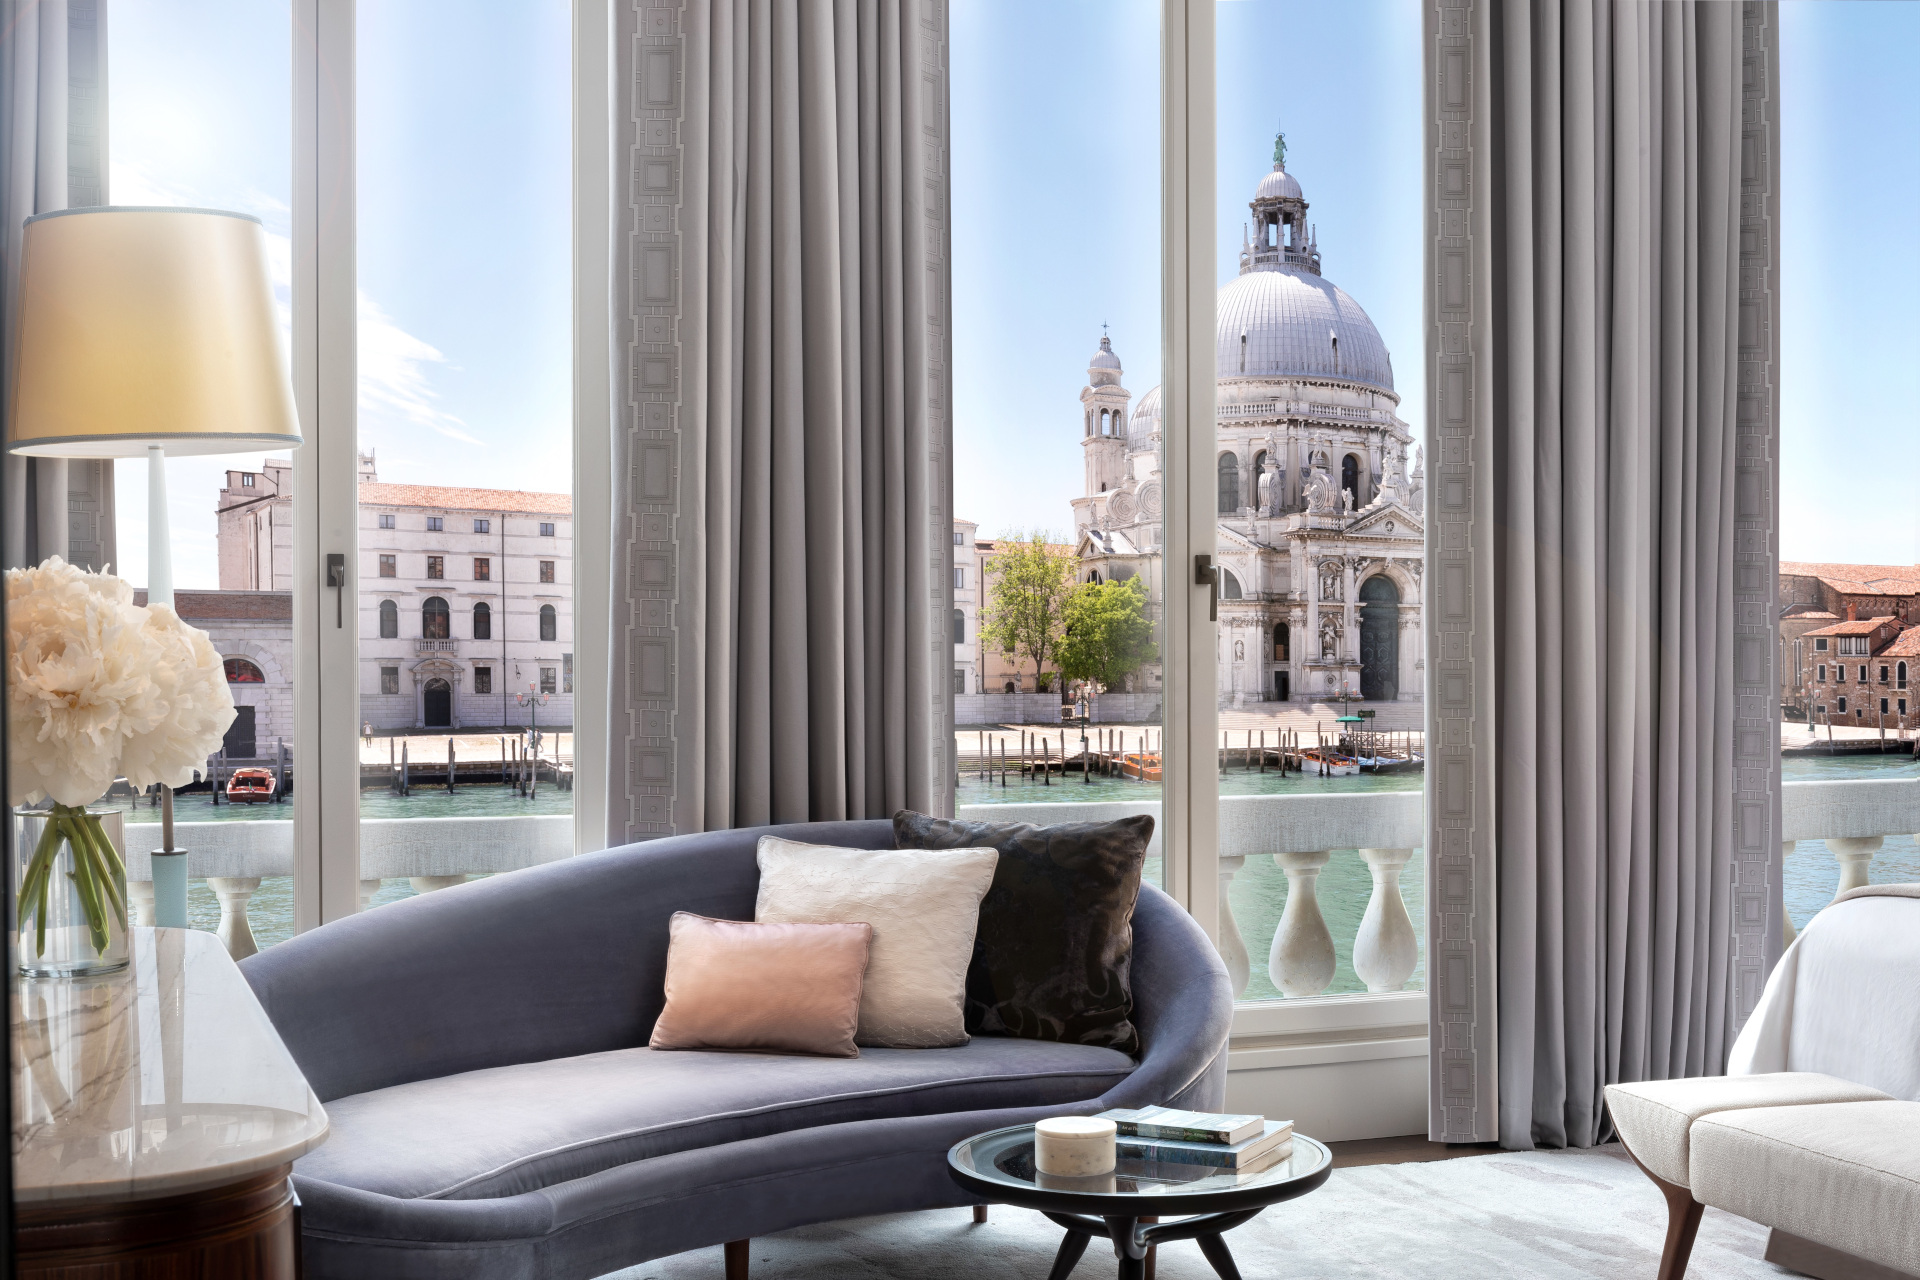 Elegant sitting room with windows overlooking Venetian canal